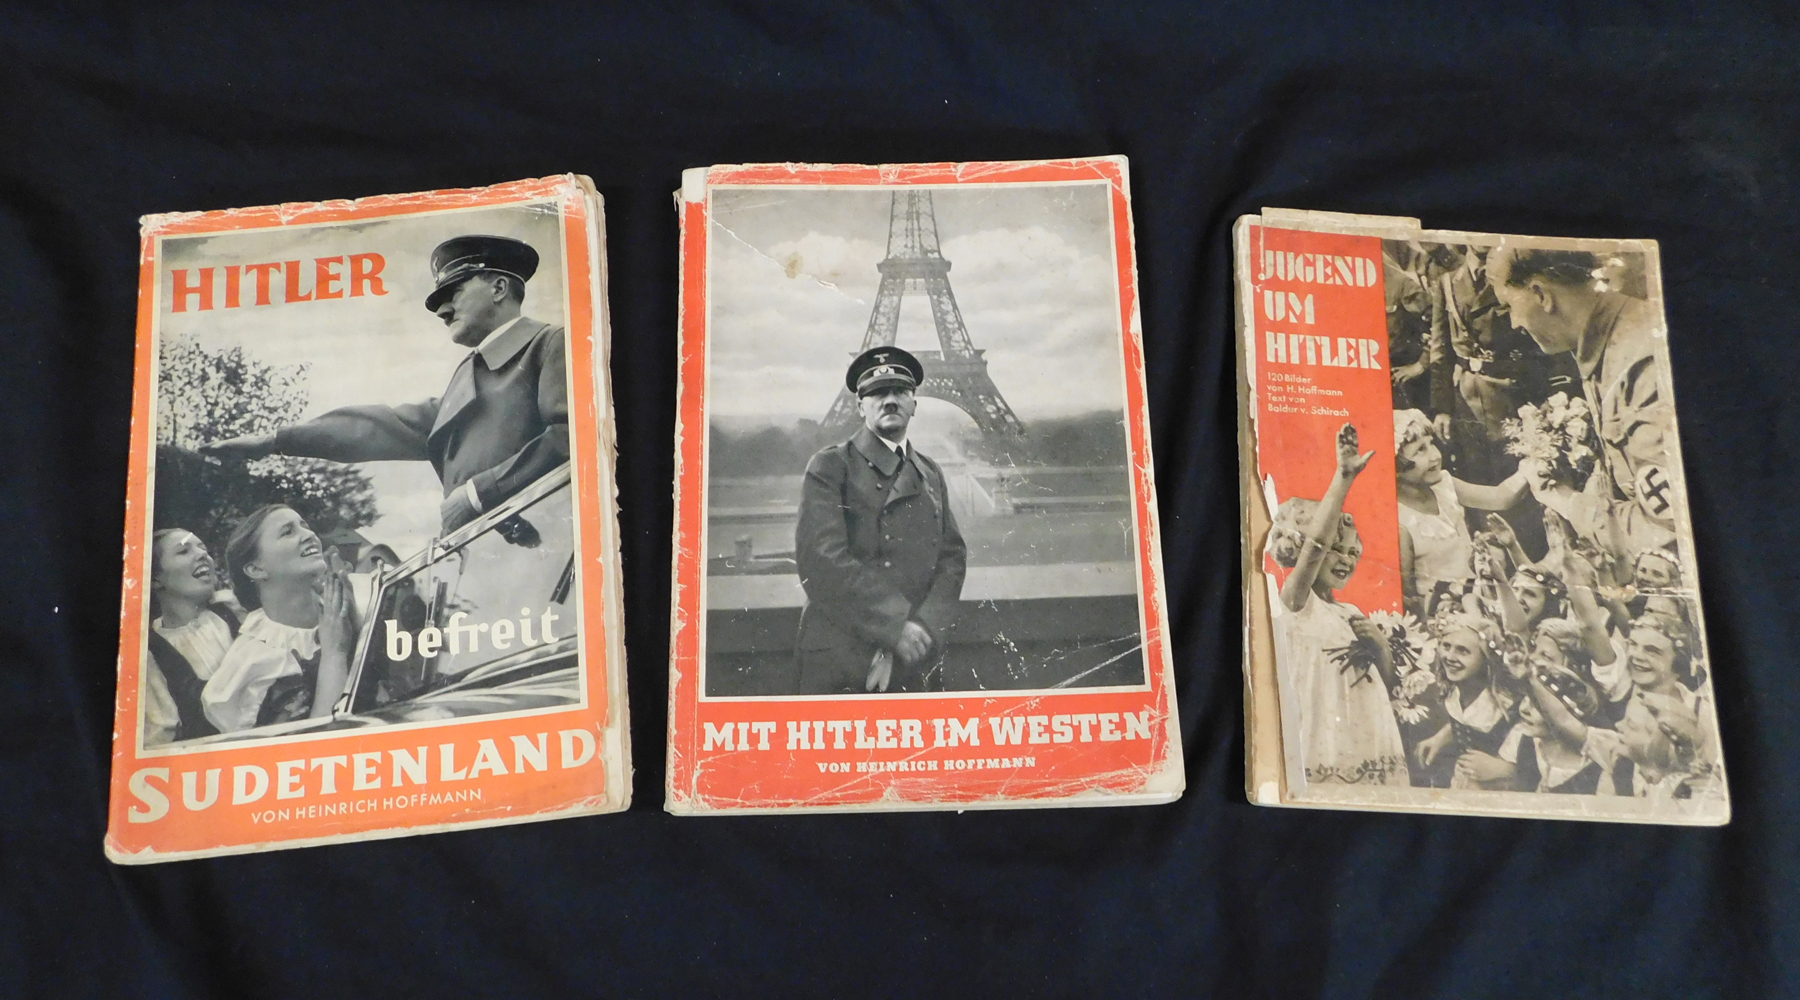 HEINRICH HOFFMANN: 3 titles: JUGEND UM HITLER, Berlin, 1935, original pictorial wraps worn and